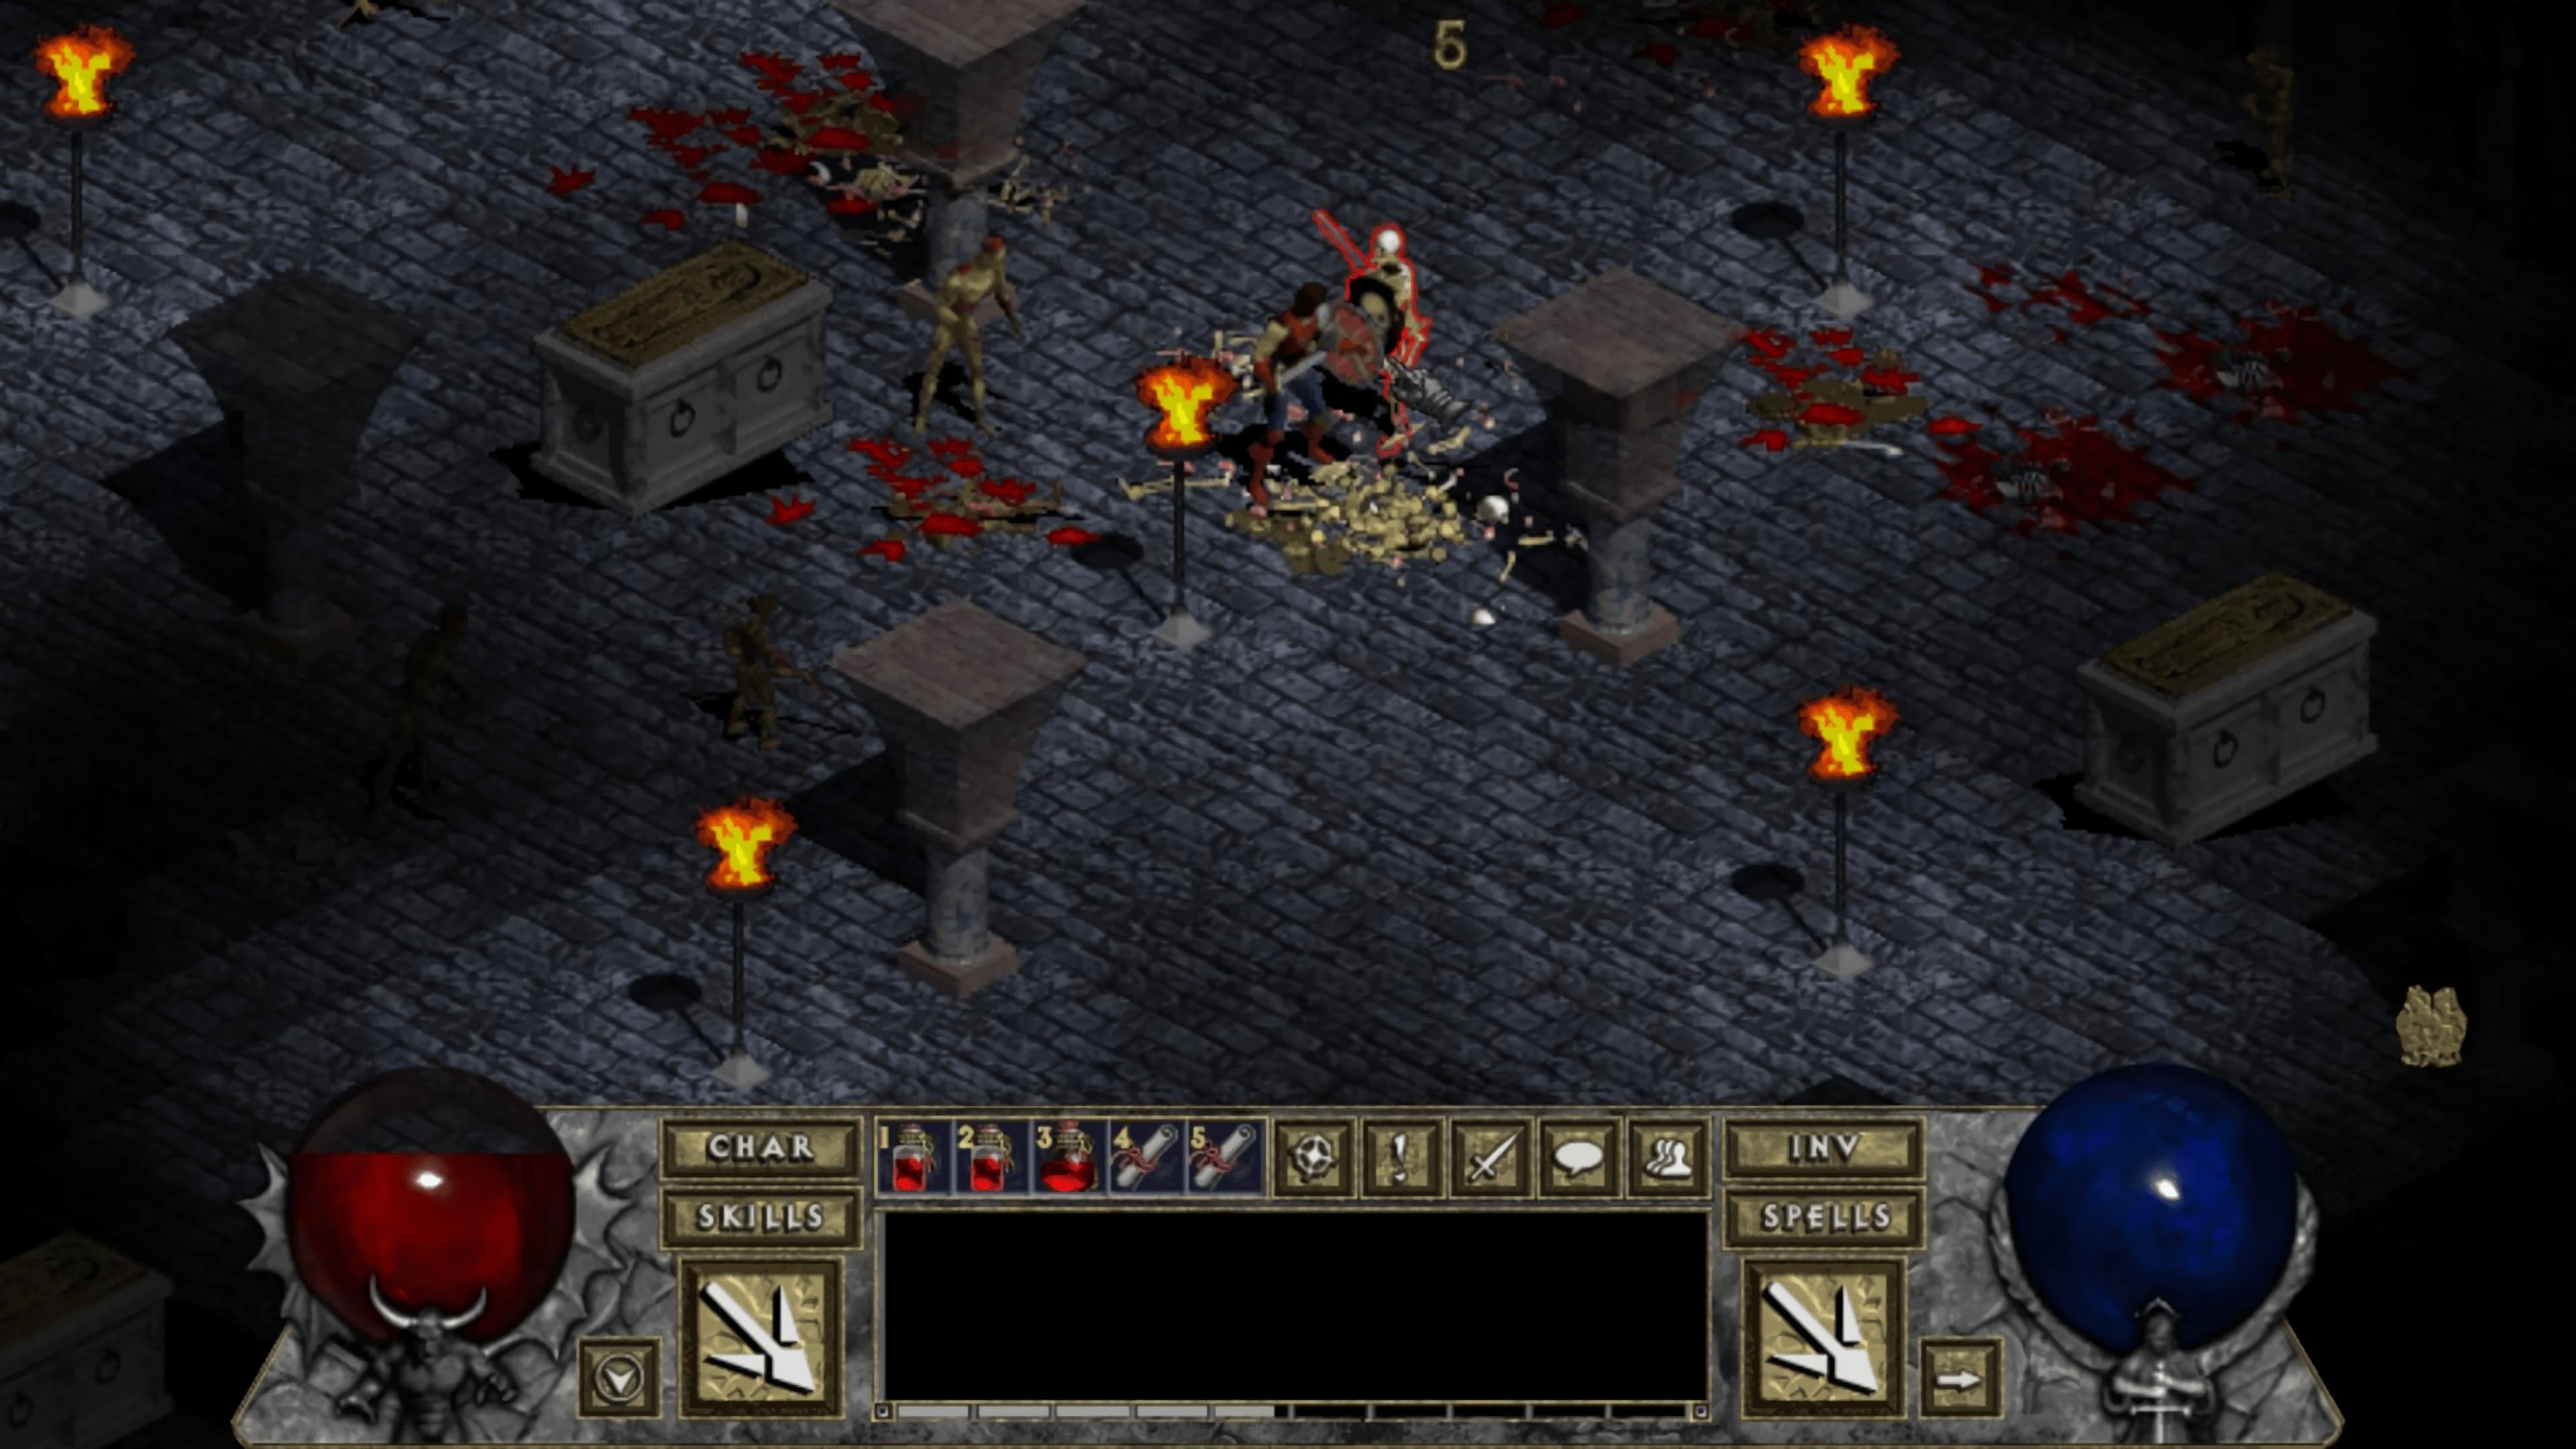 Game diablo играть. Diablo игра 1. Diablo 1 1996. Diablo 2 игра 1996. Диабло 1 игра геймплей.